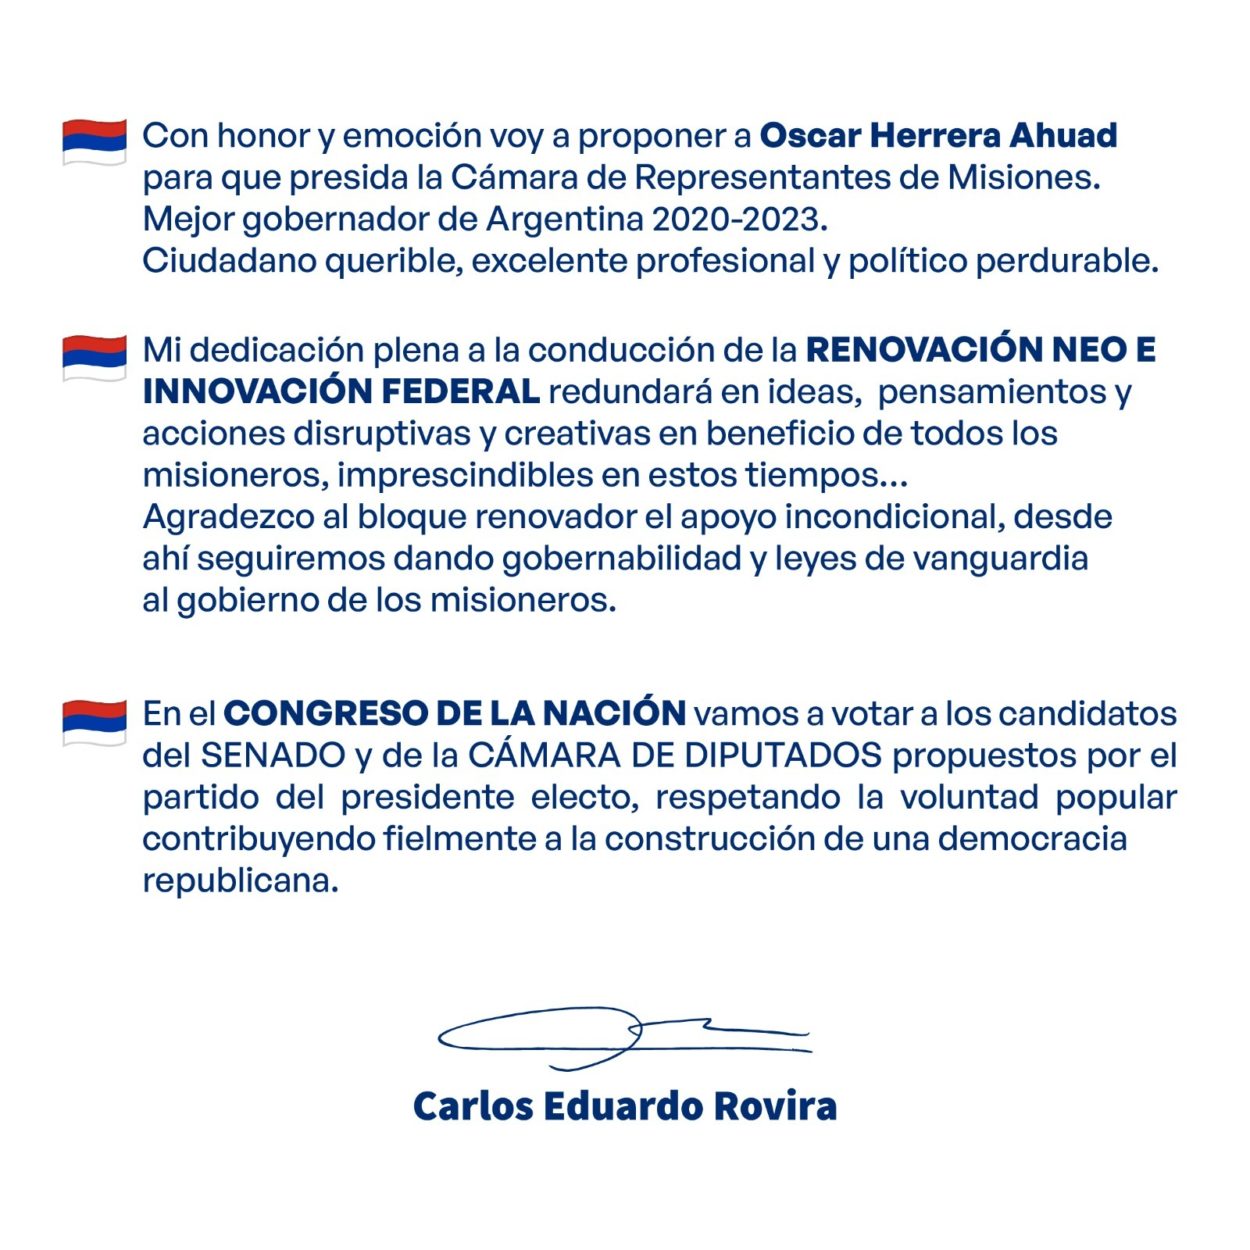 Rovira postuló a Herrera Ahuad para presidir la Cámara de Representantes imagen-2